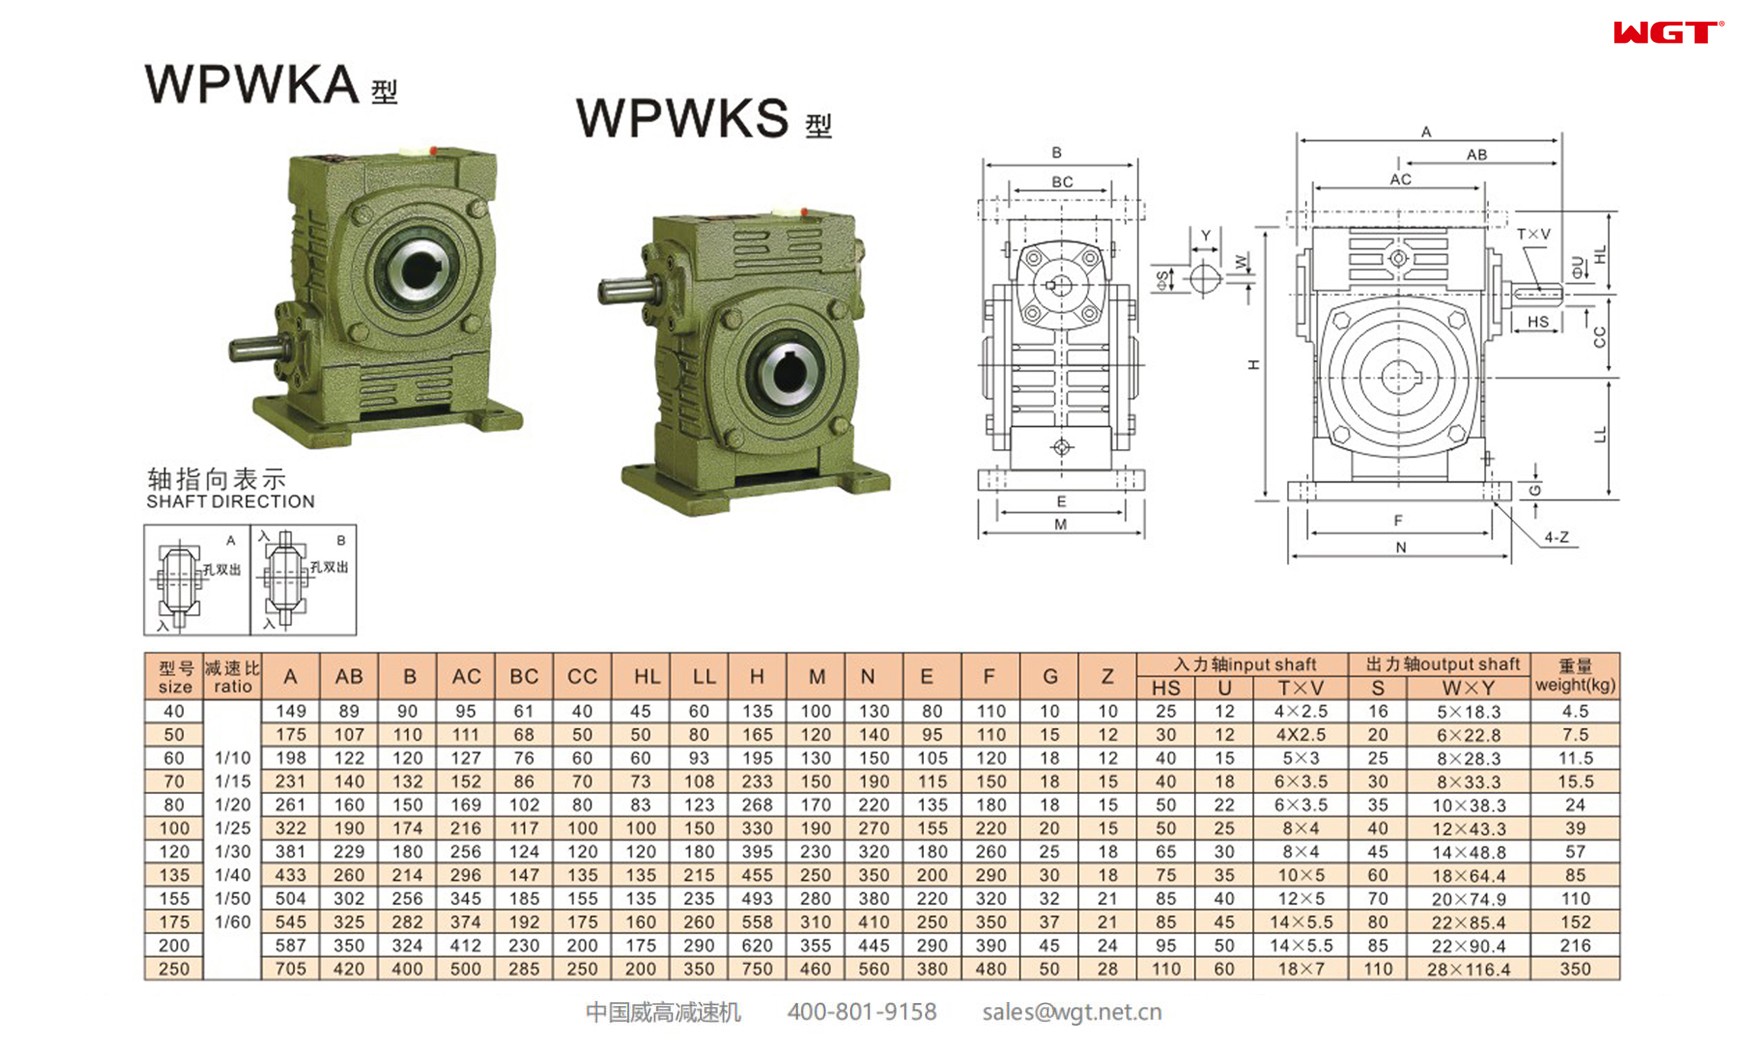 WPWKA70 worm gear reducer universal speed reducer 